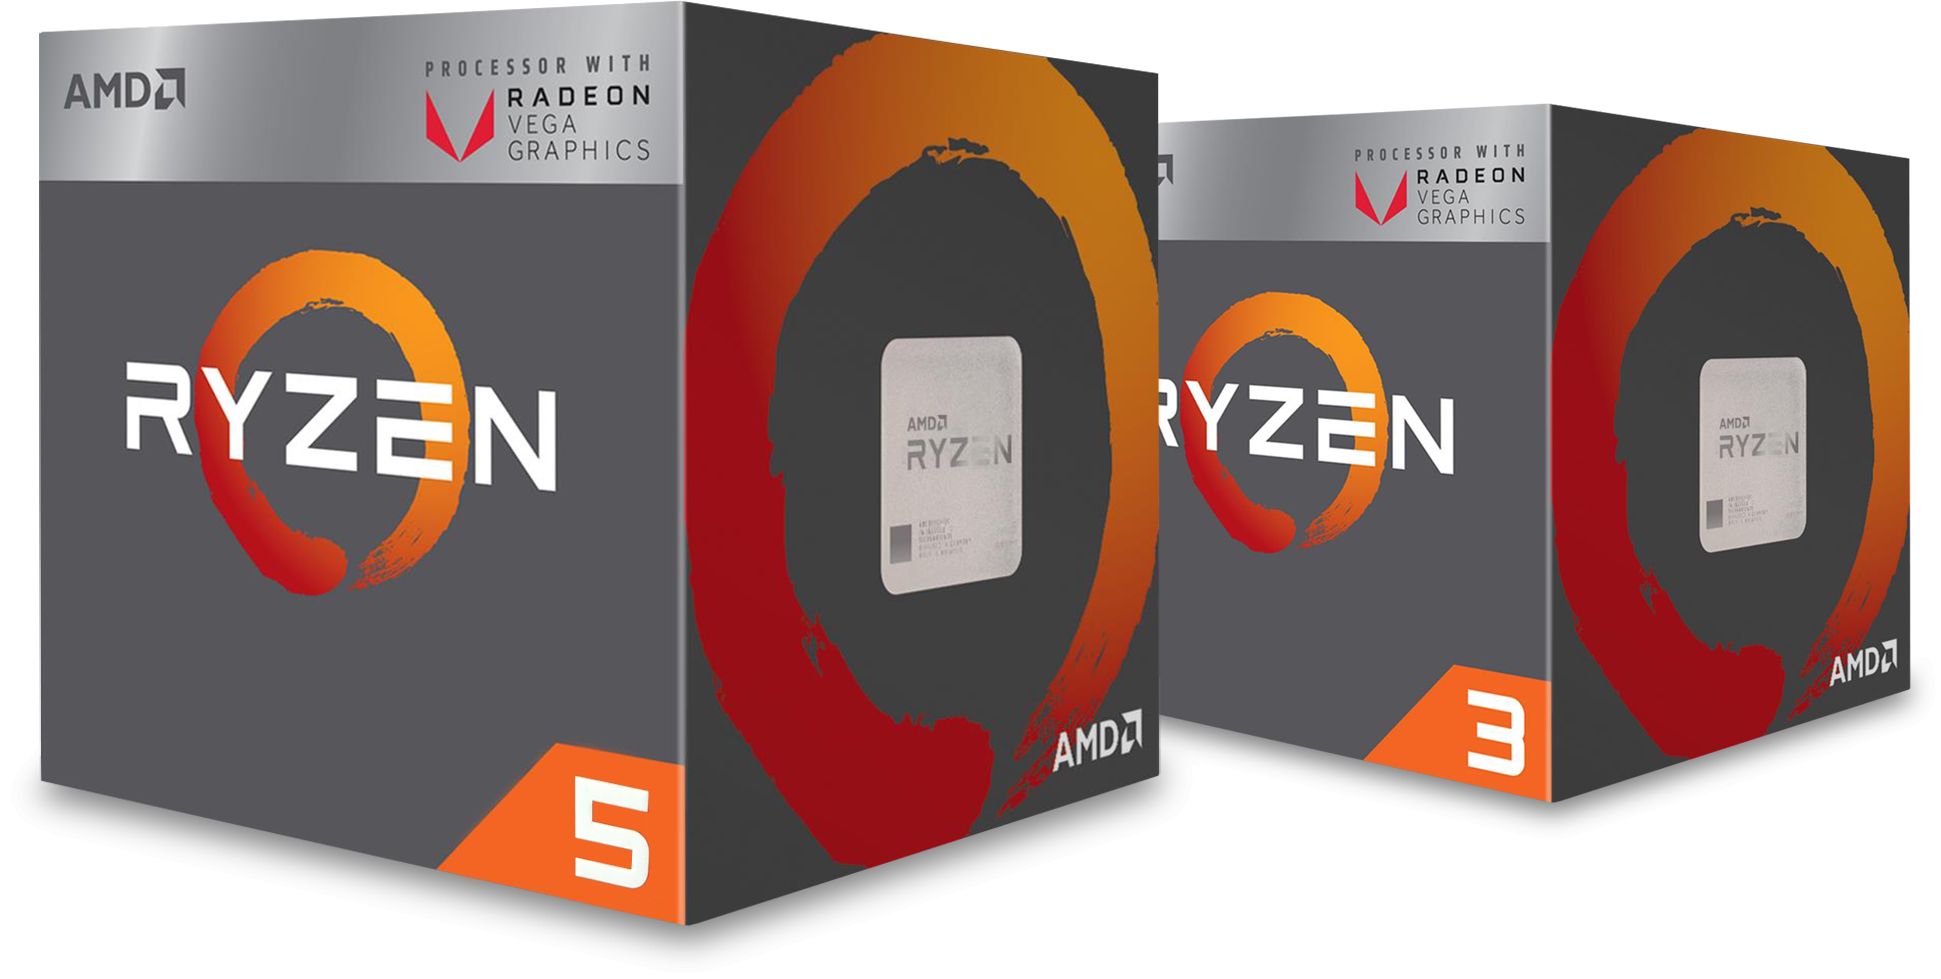 AMD Ryzen 3000 series Processors with Radeon RX Vega Graphics